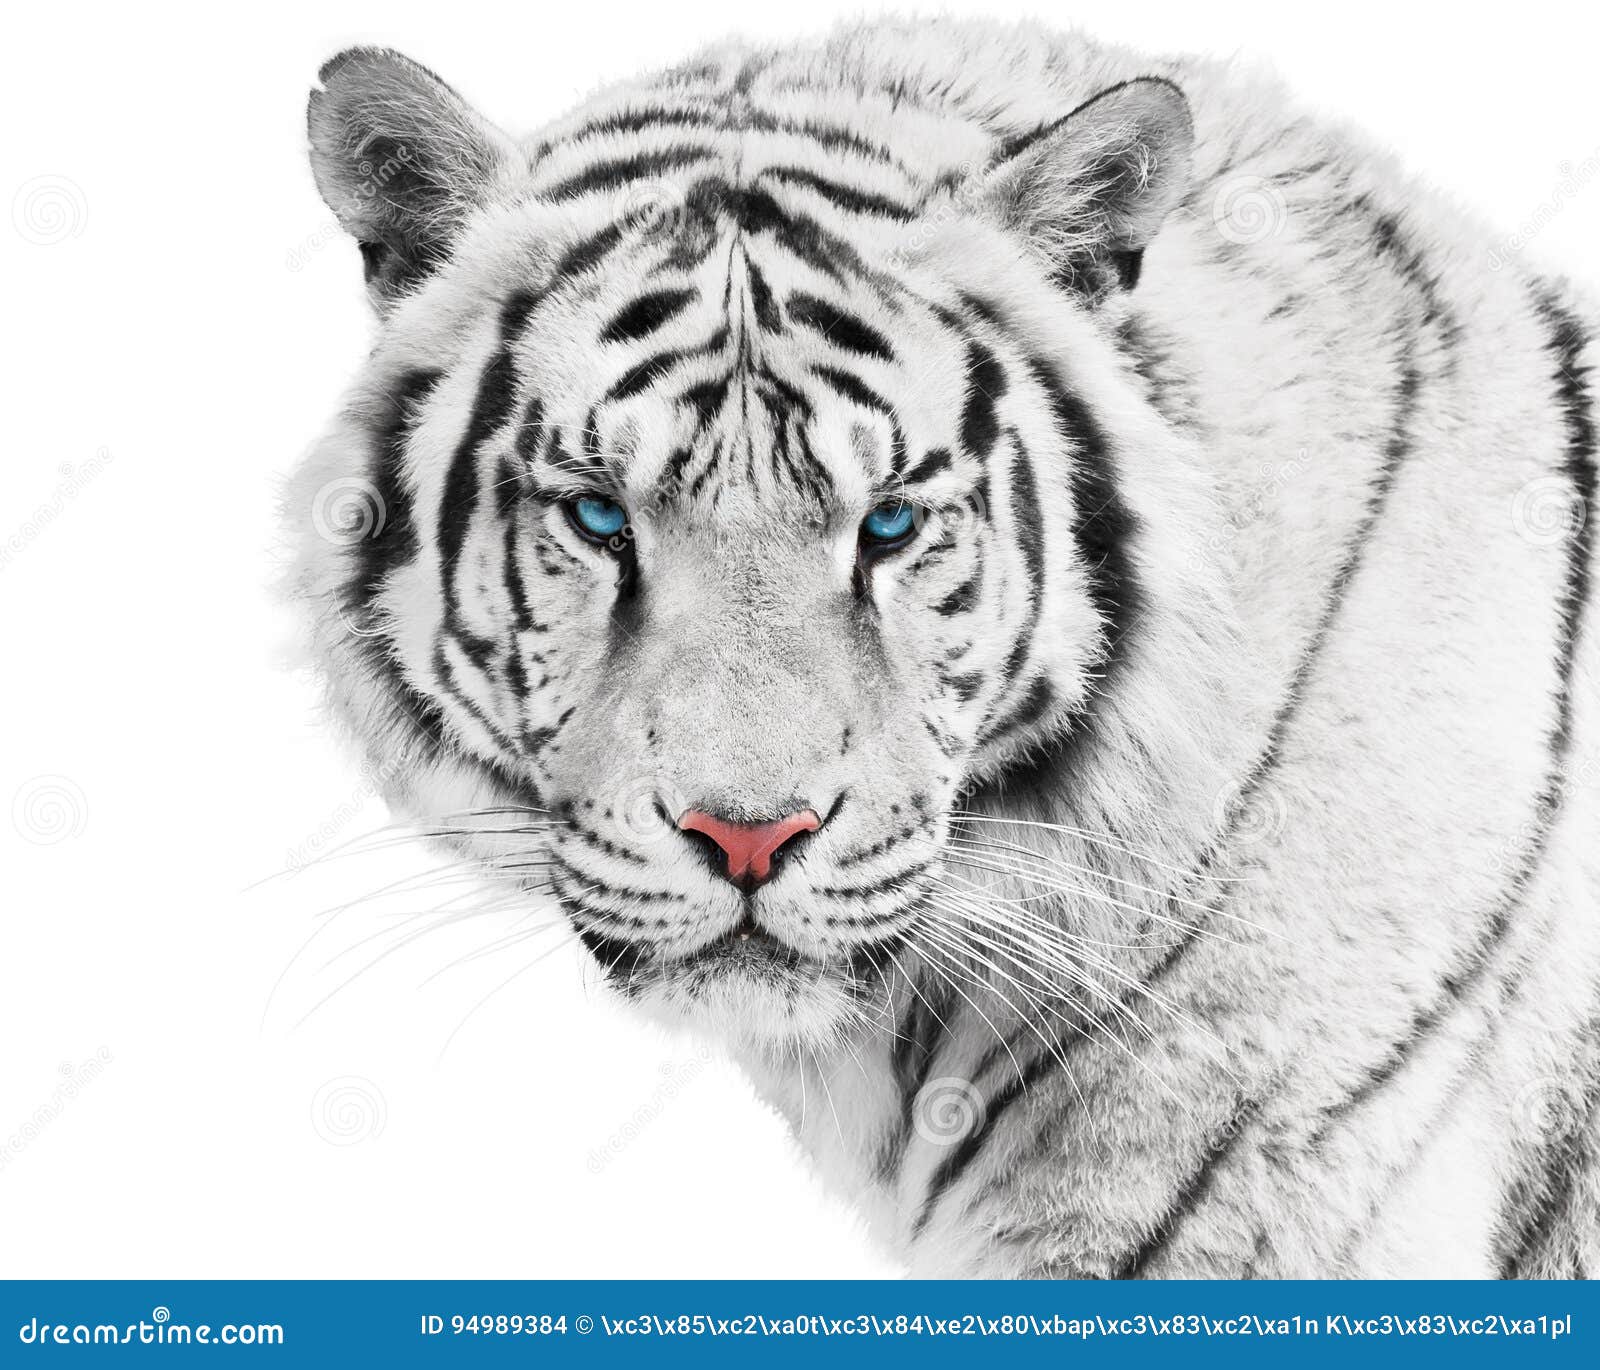 White Tiger, Animal wallpaper - Coolwallpapers.me!